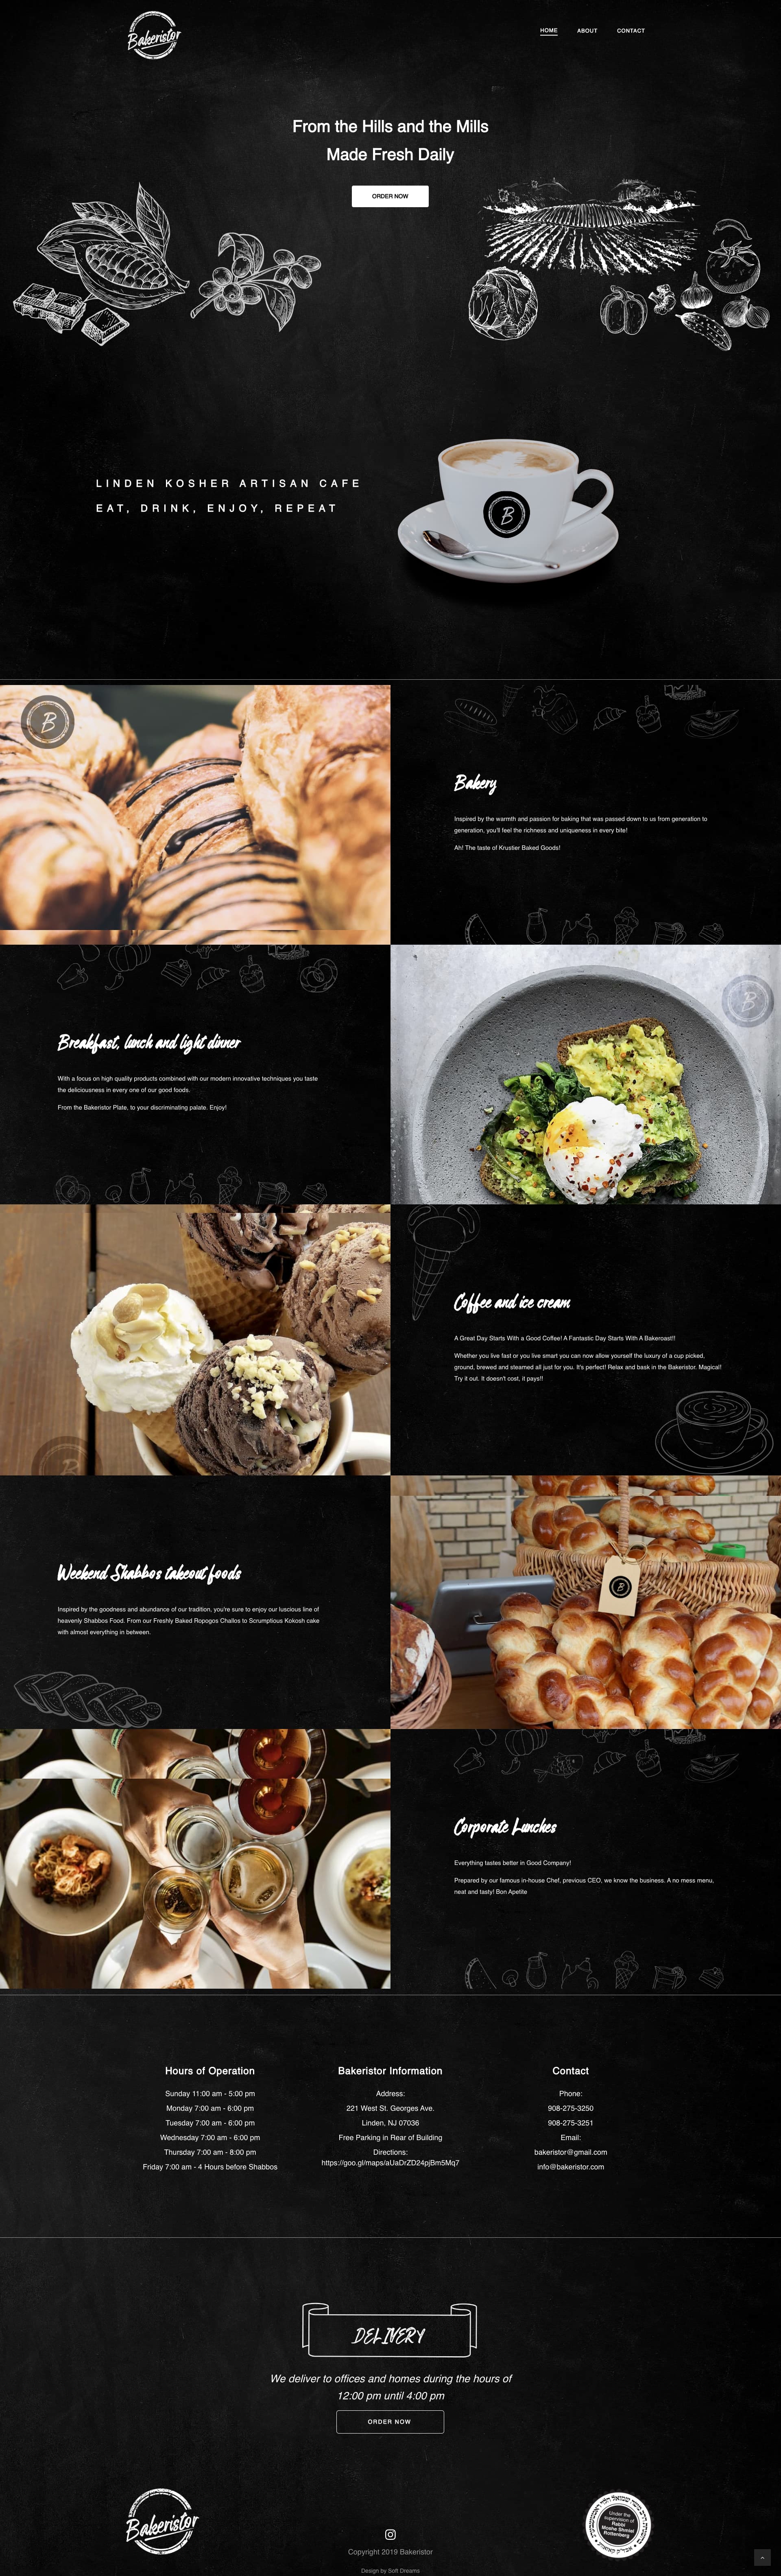 bakeristor-homepage